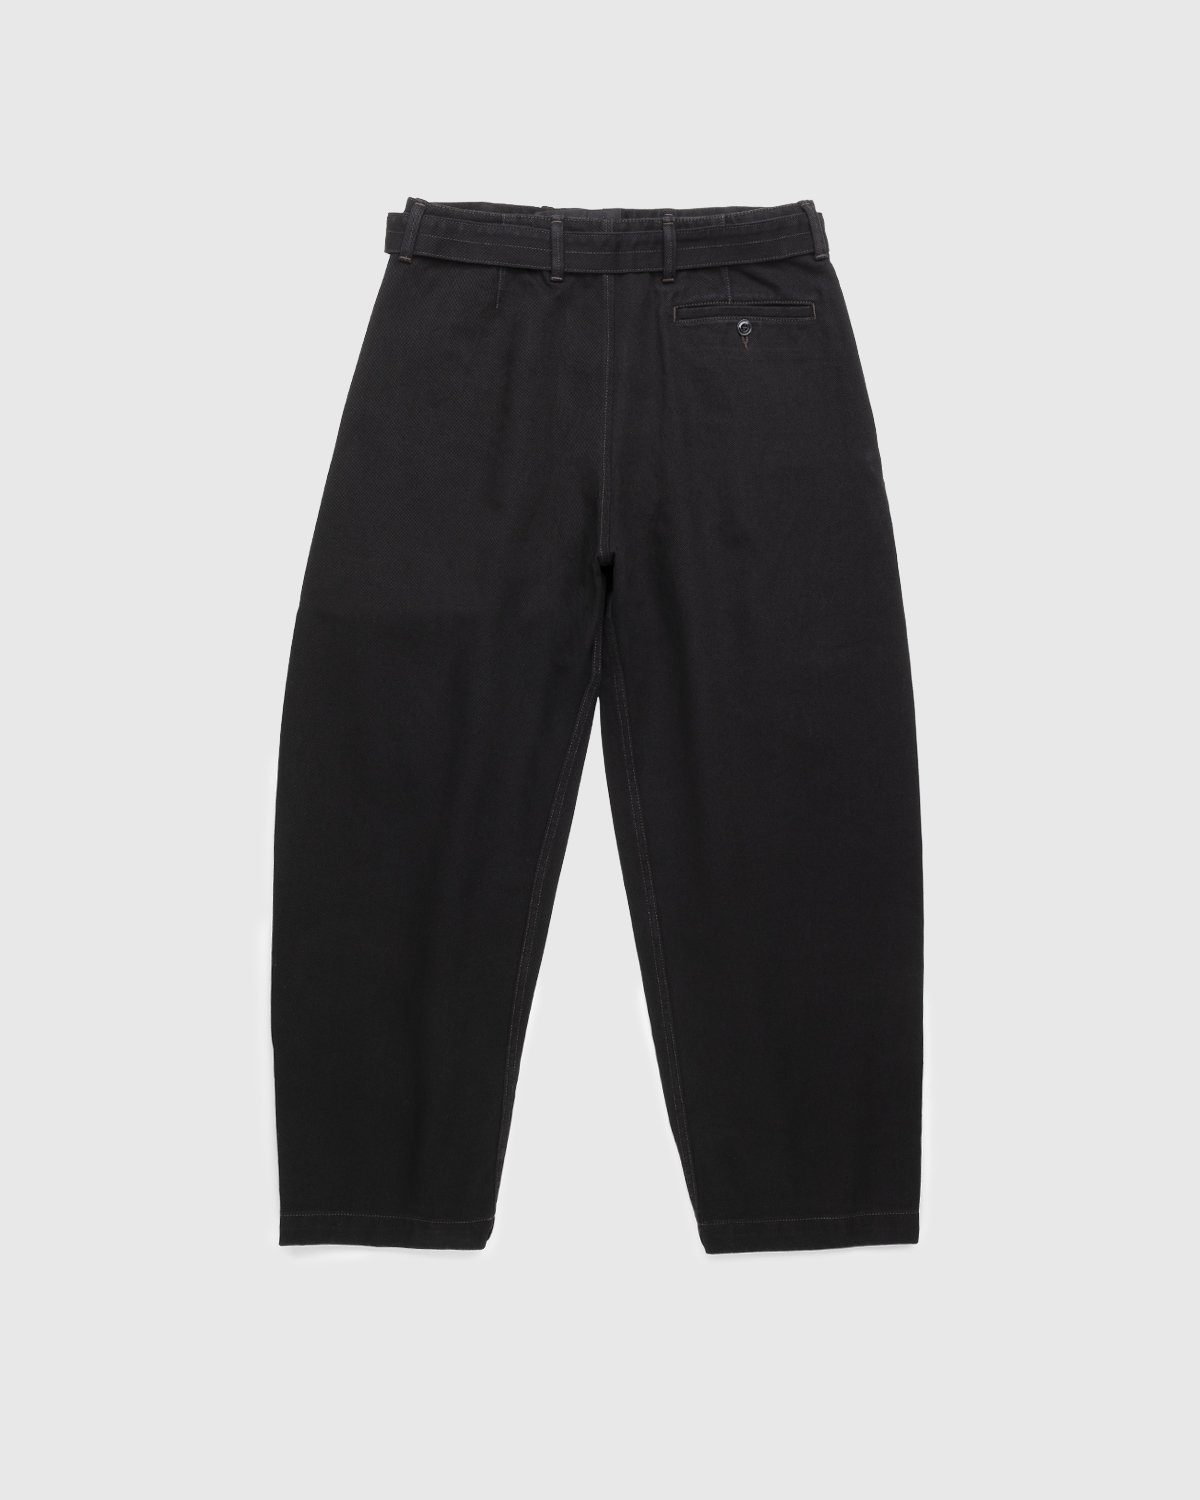 Lemaire - Rinsed Denim Twisted Pants Black - Clothing - Black - Image 2